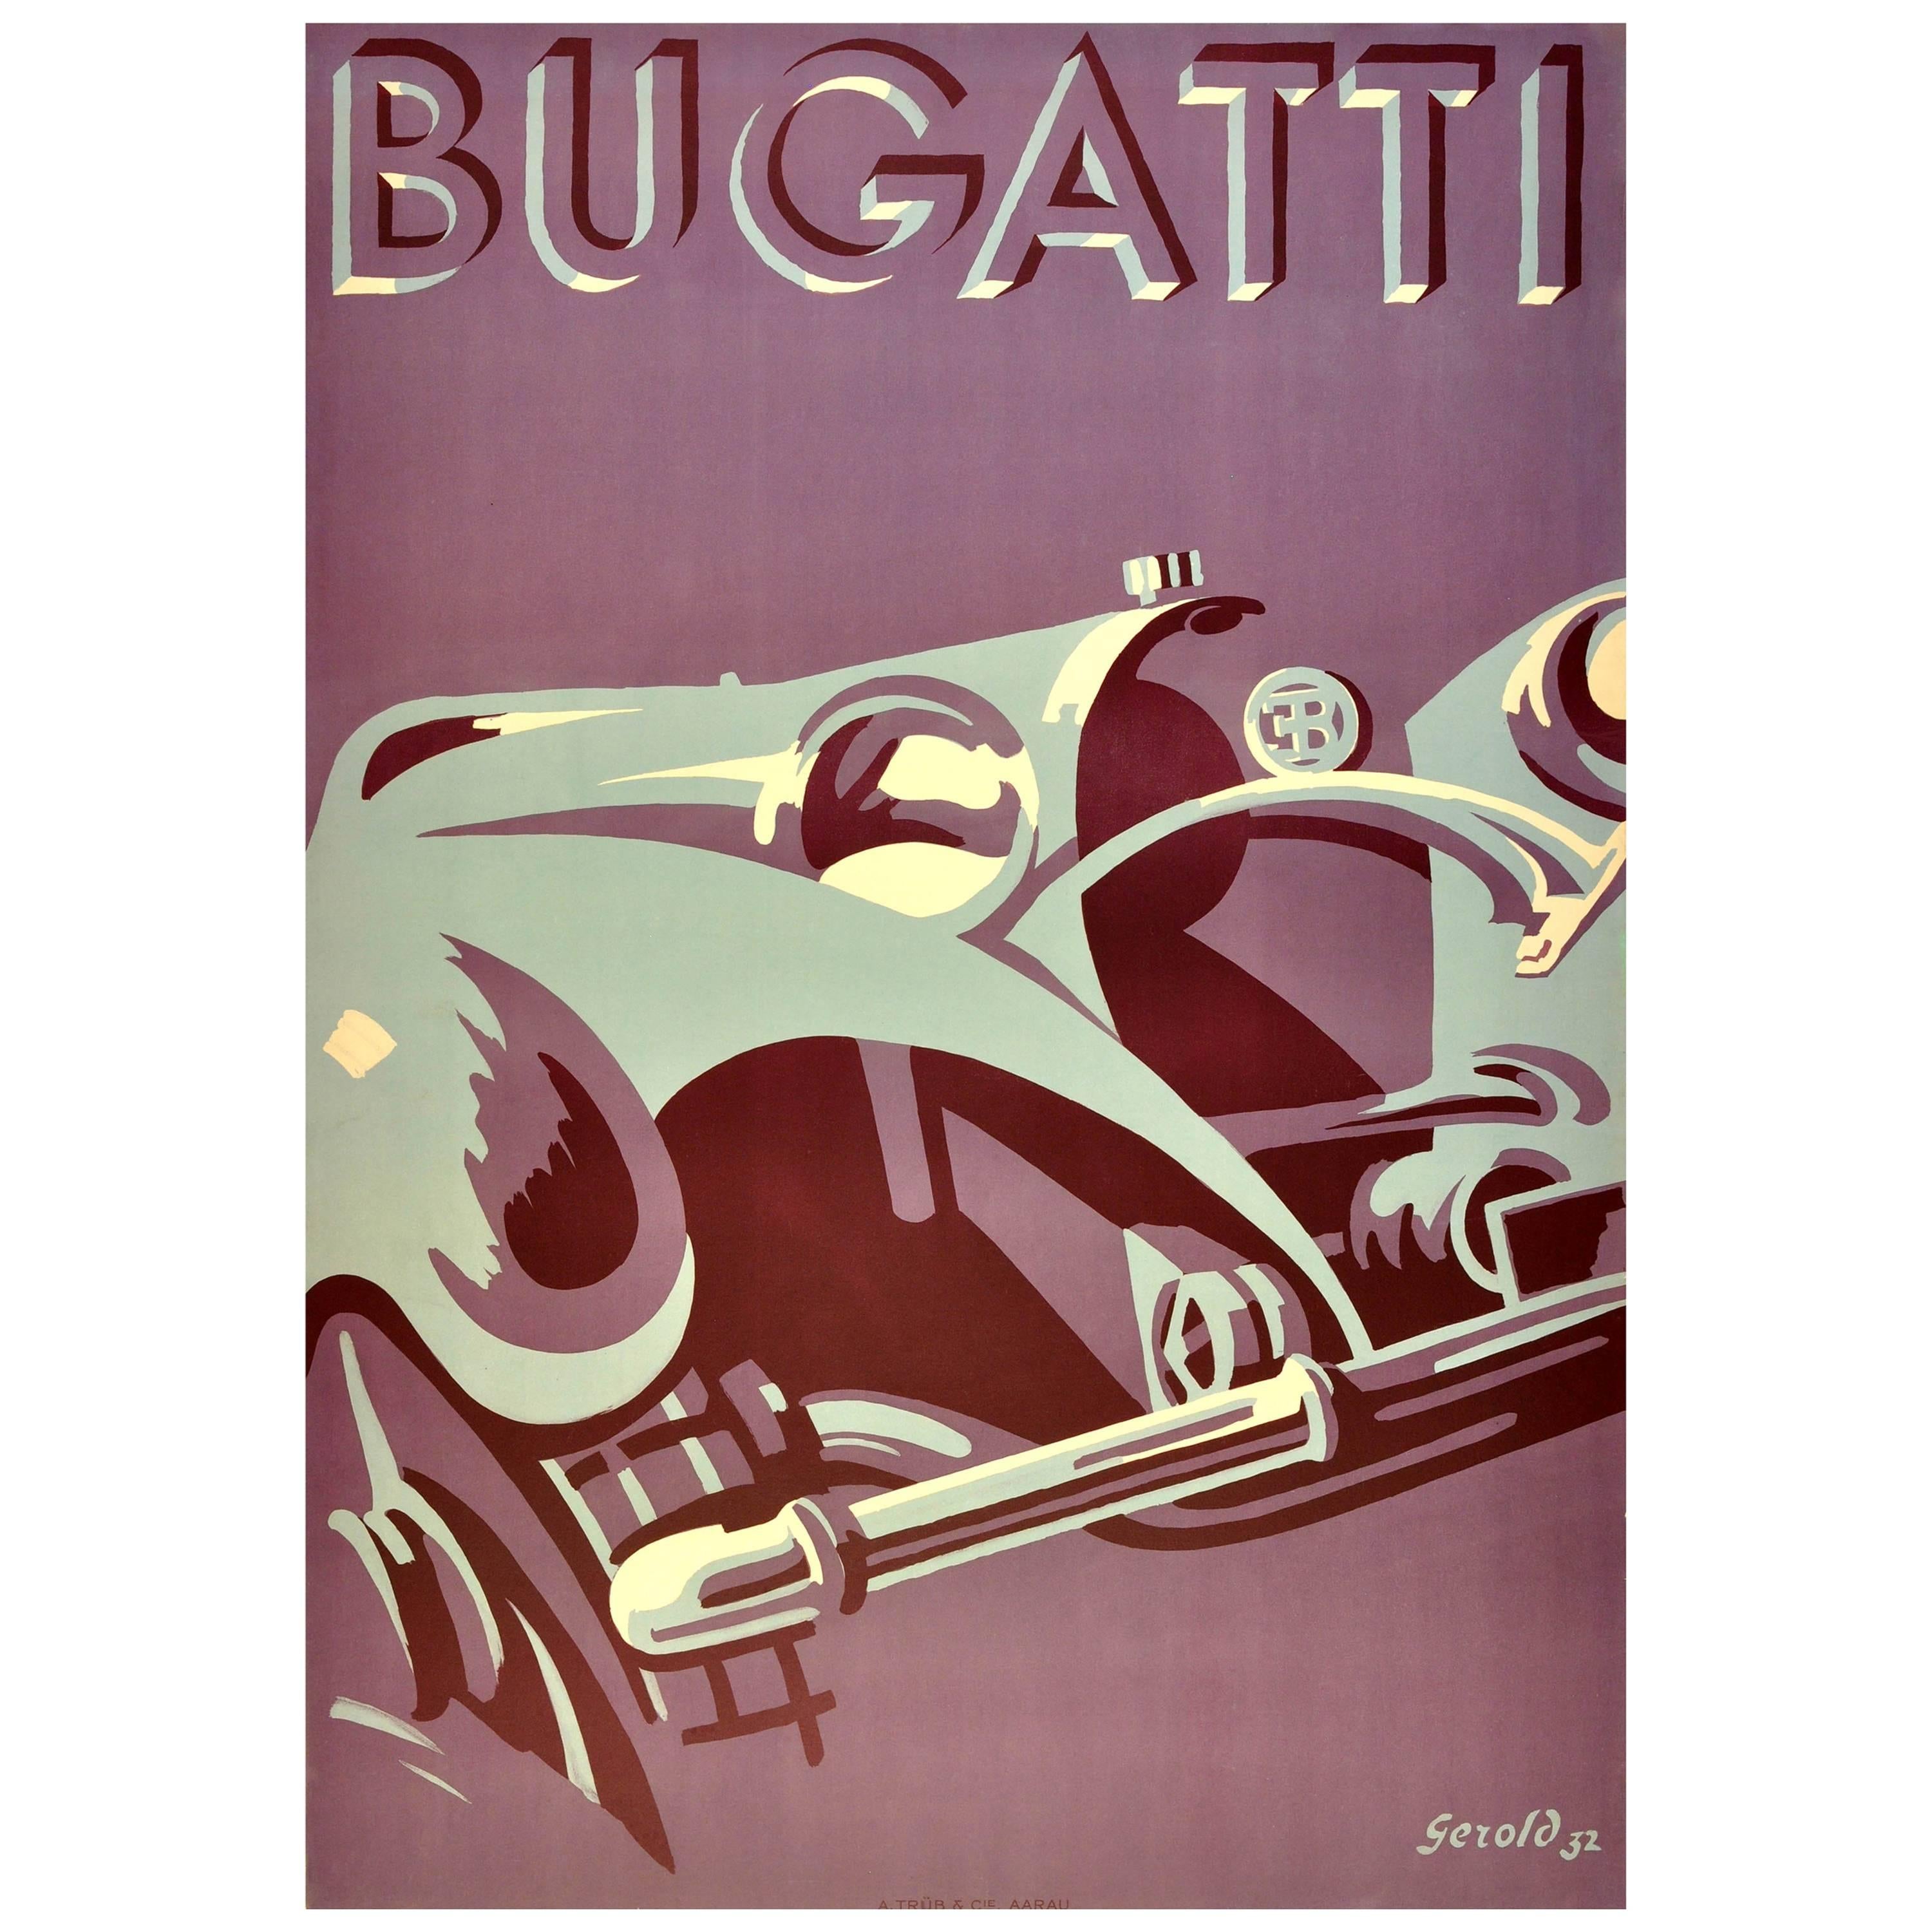 Large Original Vintage Iconic Art Deco Car Advertising Poster, “Bugatti Type 55”